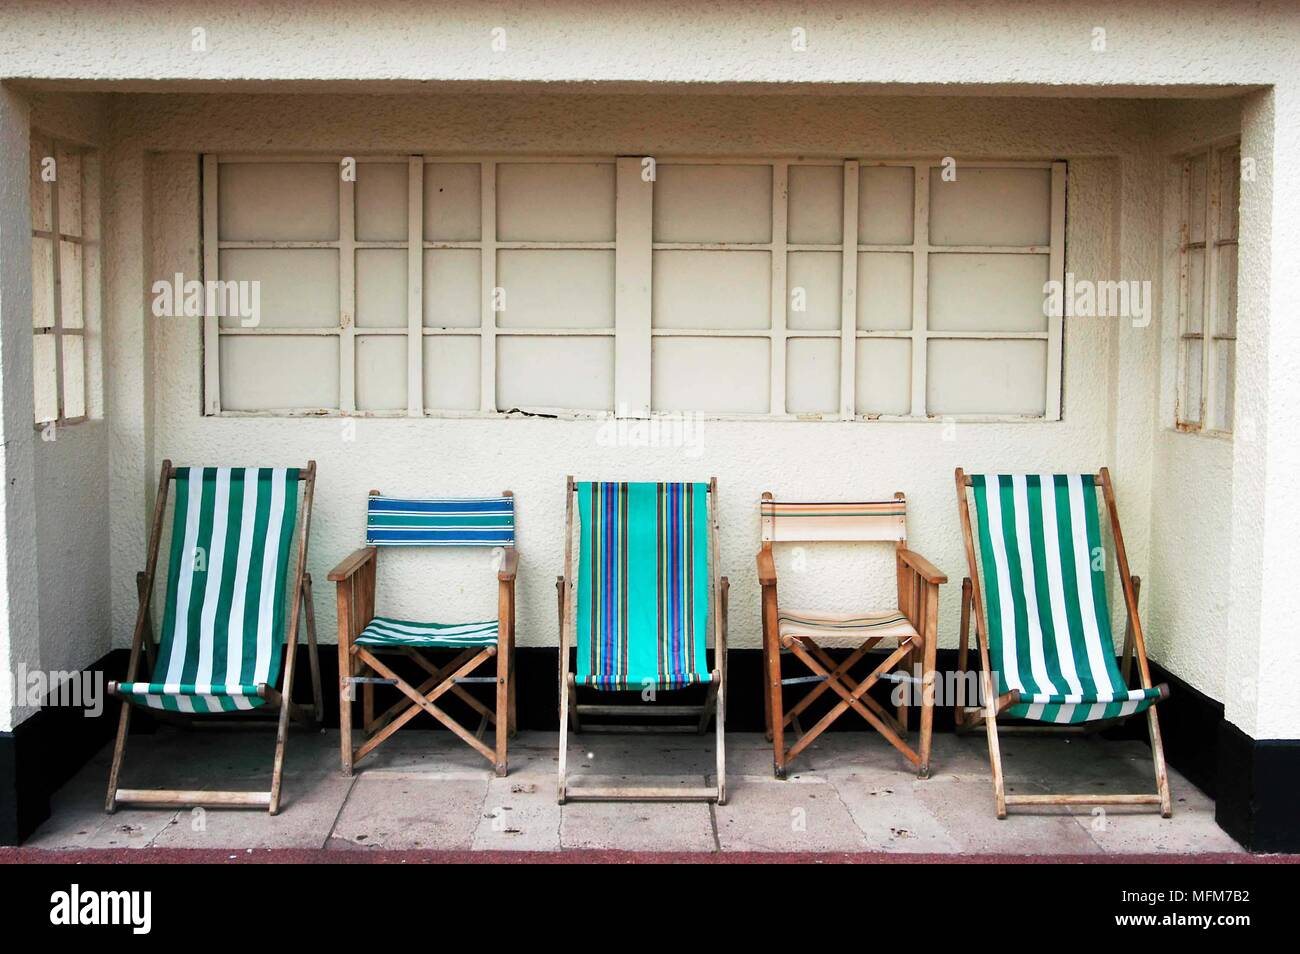 David Potter / Band /Hotshoe/Photoshot - Beach scenes - Deckchairs in a hut Great Yarmouth - UK. Bandphoto/COMPULSORY CREDIT: Hotshoe/Photoshot & Agen Stock Photo